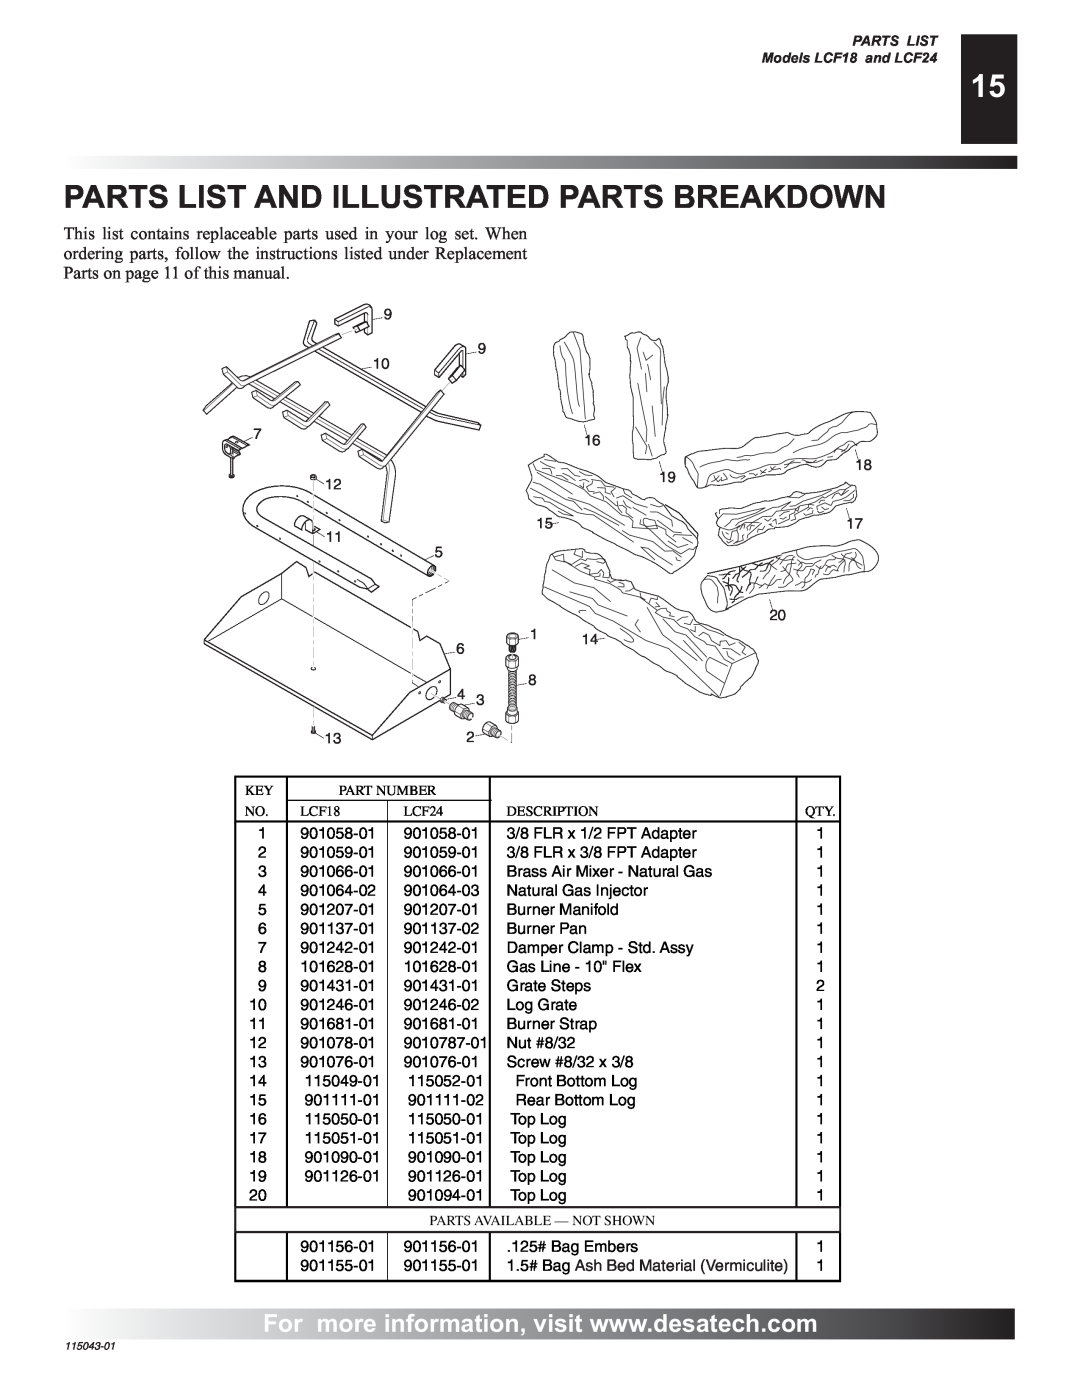 Desa RGA 2-72 installation manual Parts List And Illustrated Parts Breakdown, 1.5# Bag Ash Bed Material Vermiculite 